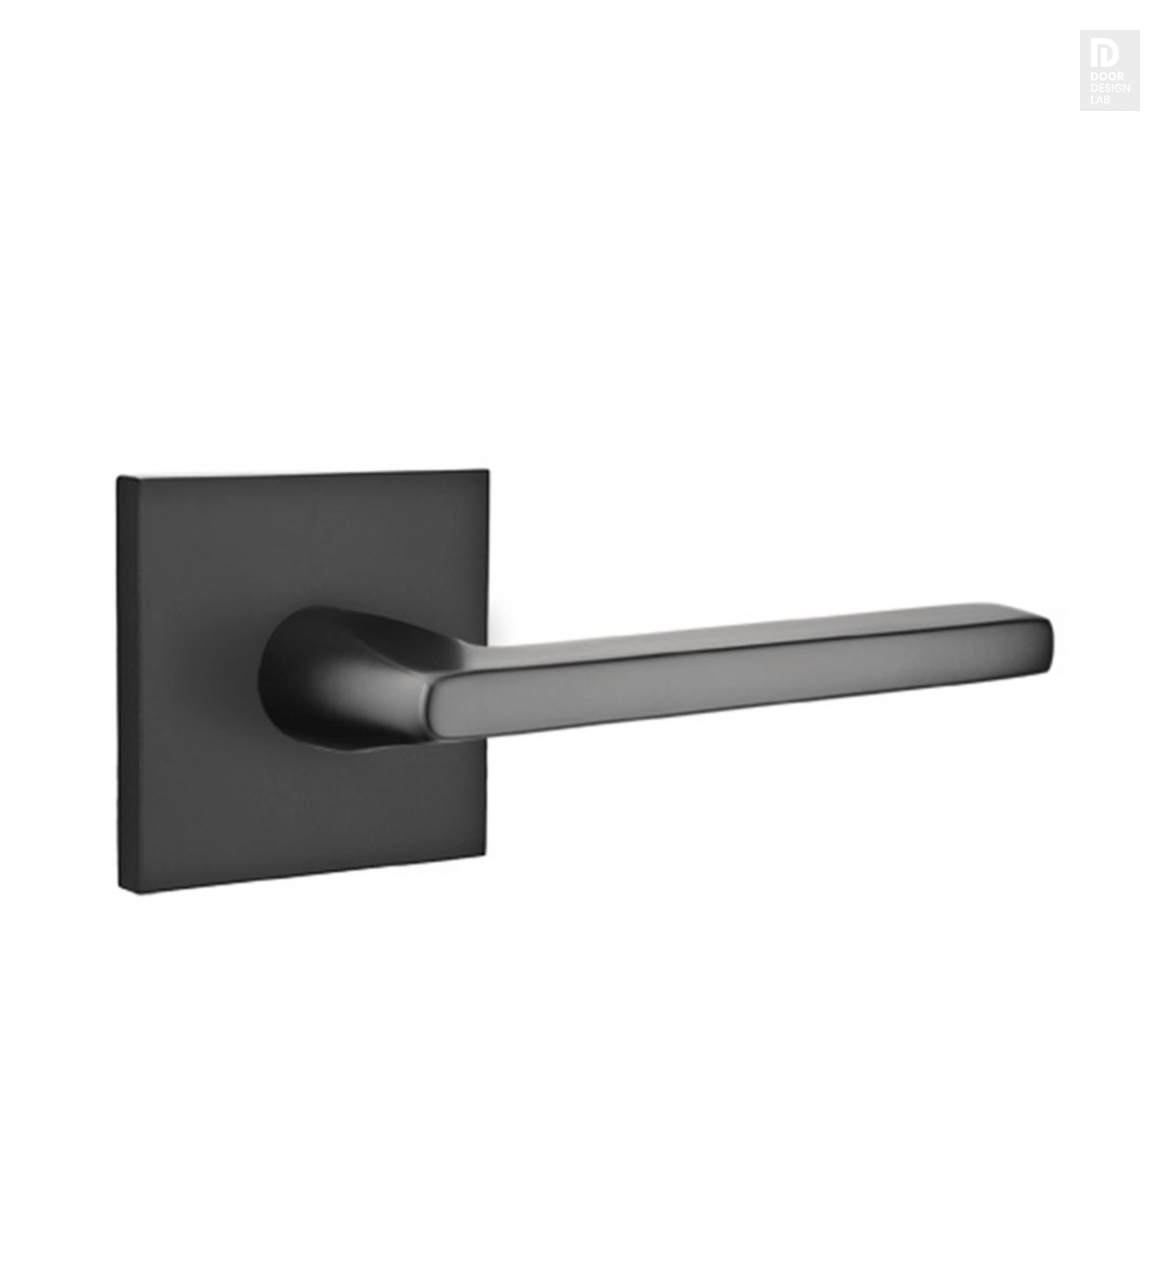 Door Lever Helios Square rosette (Black hardware) Privacy Right by Emtek